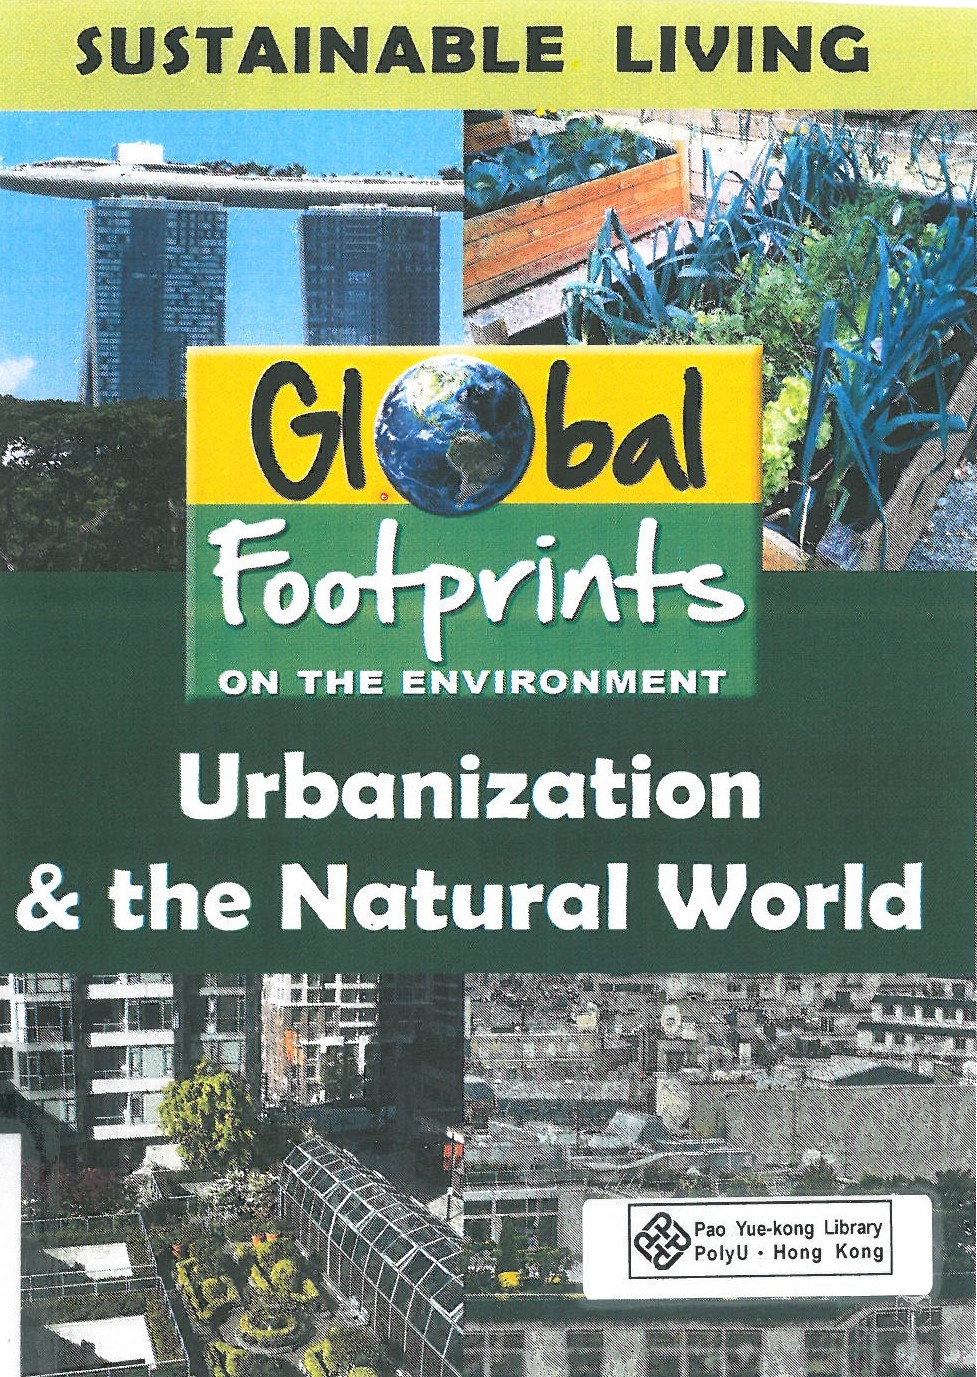 Urbanization & the natural world